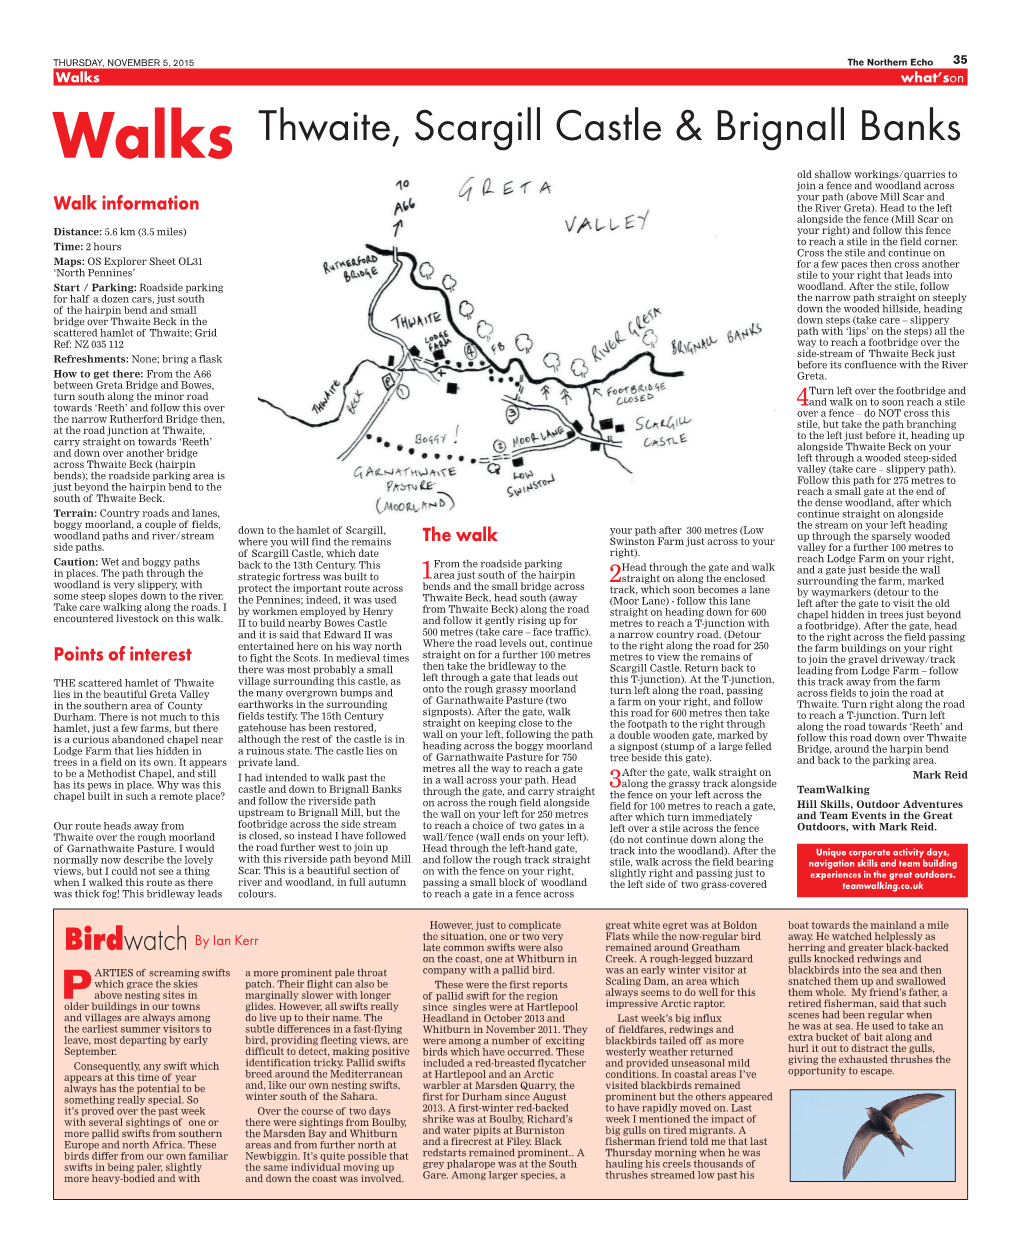 Thwaite, Scargill Castle & Brignall Banks